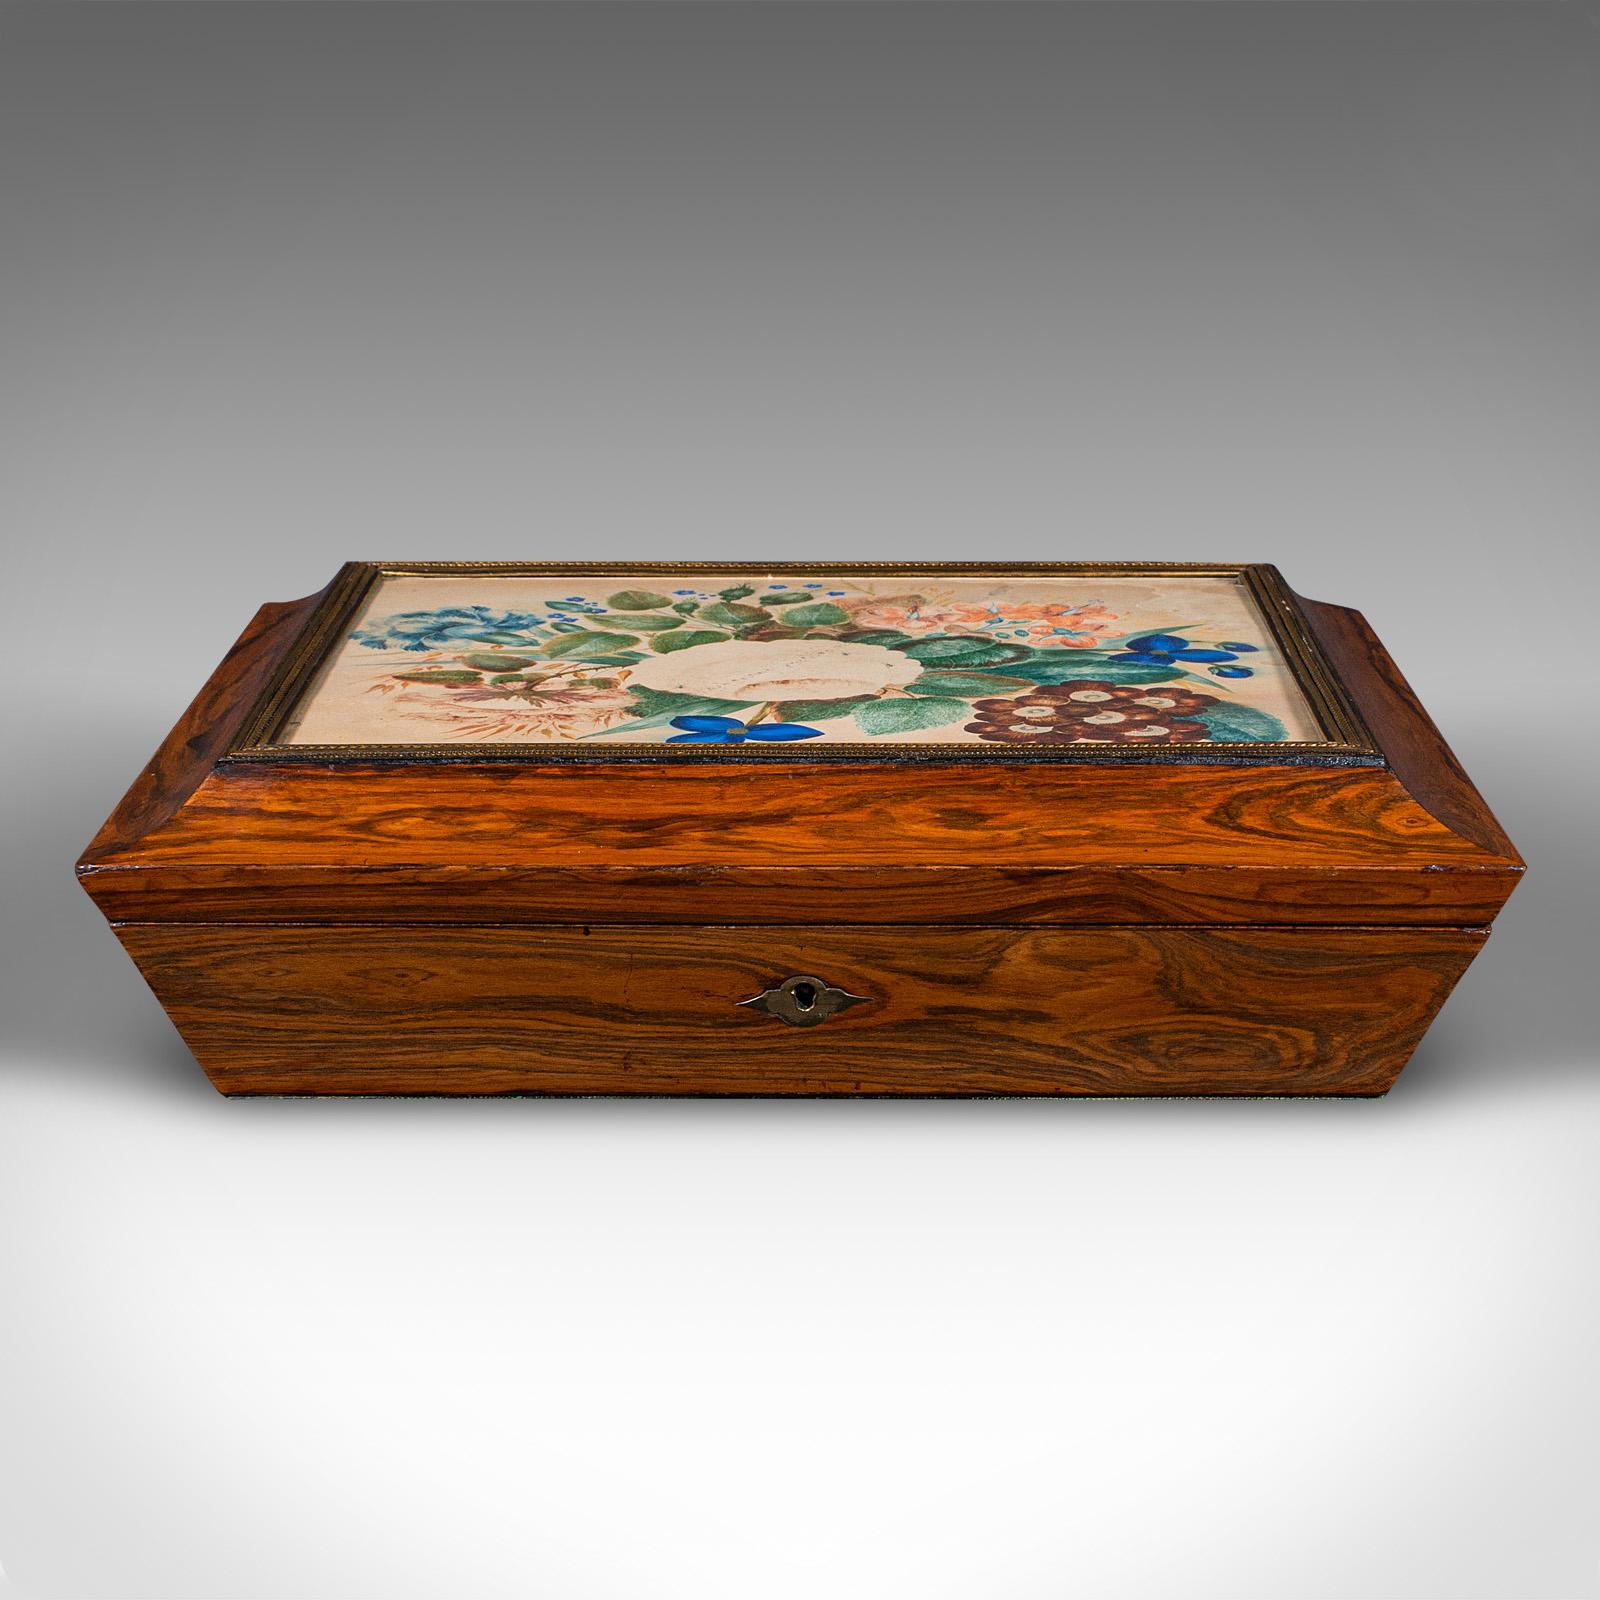 British Antique Decorative Finery Box, English, Jewellery, Keepsake, Regency, Circa 1830 For Sale